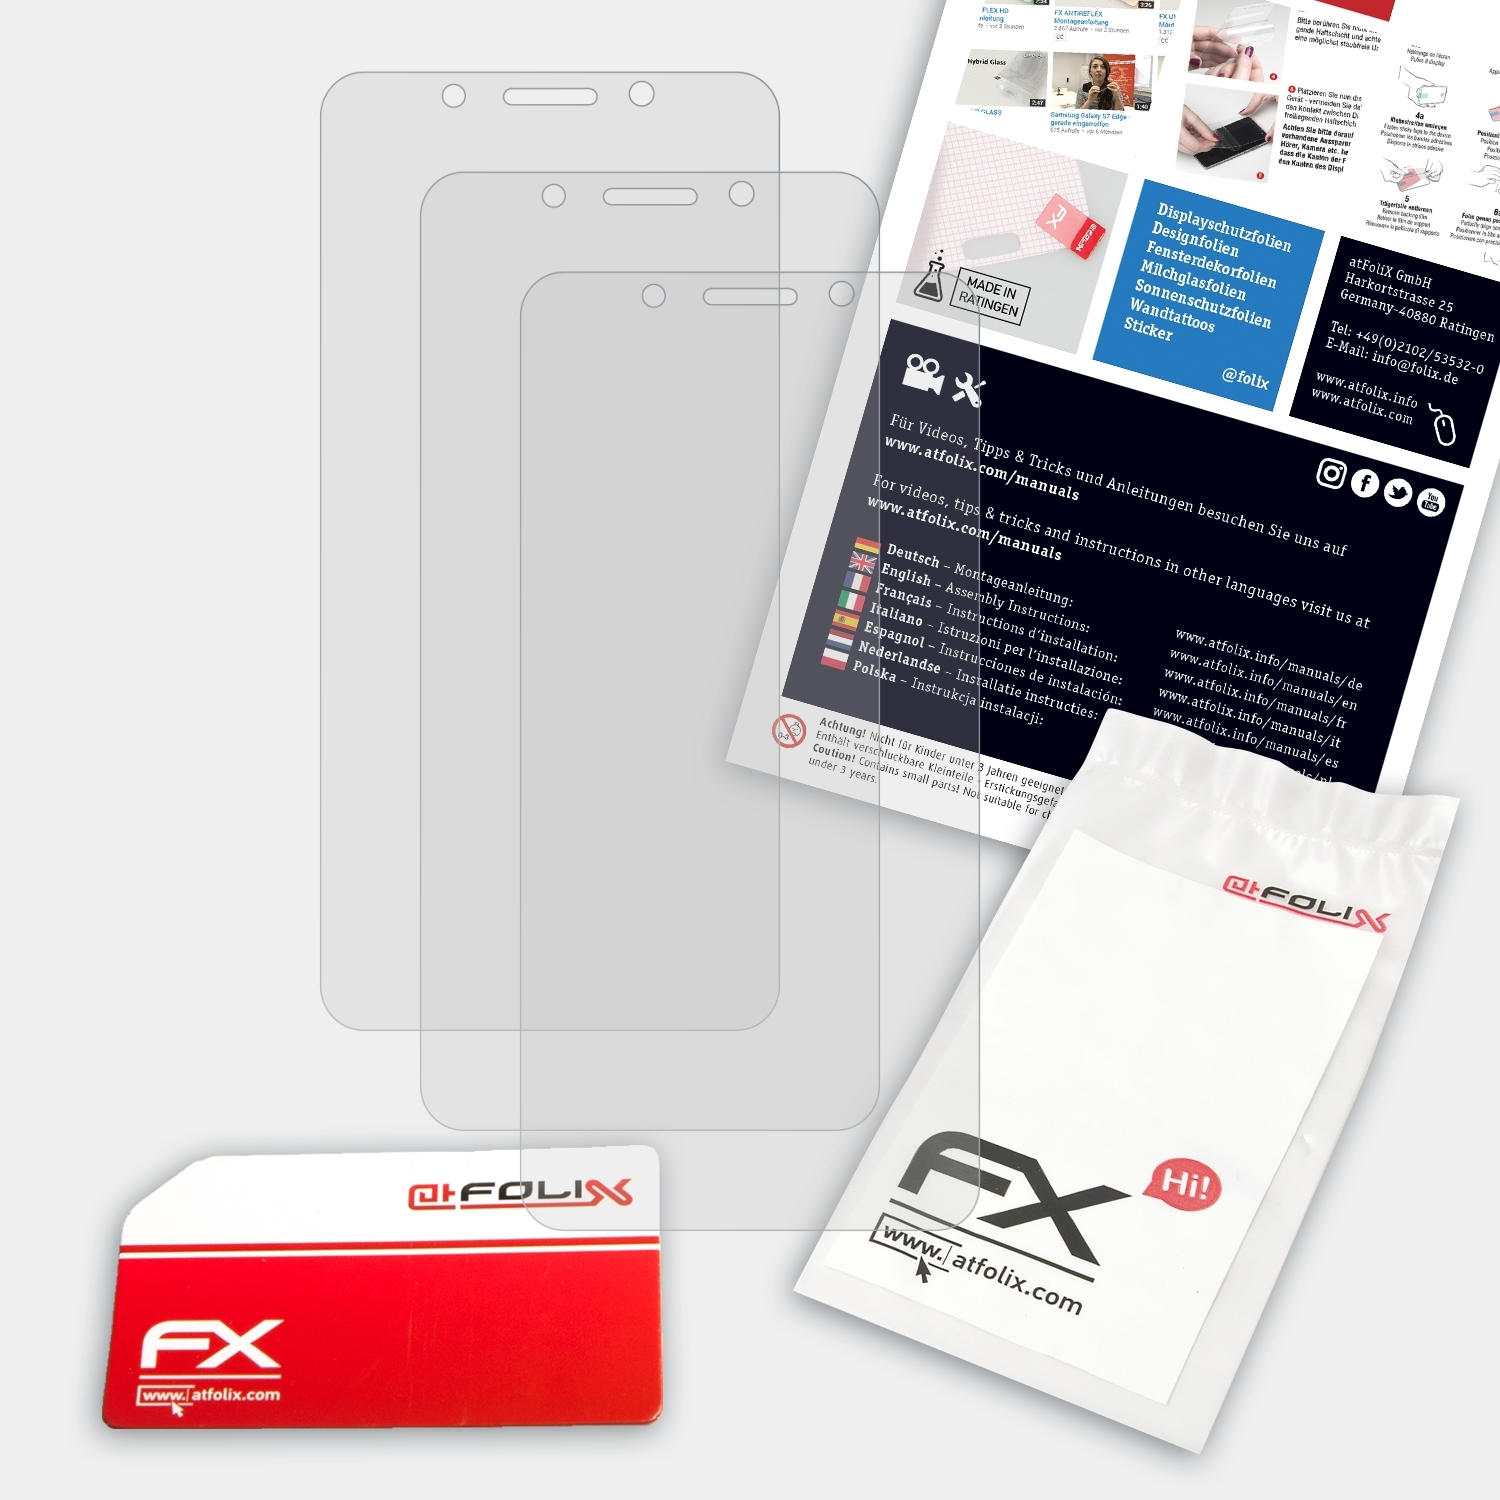 ATFOLIX 3x FX-Antireflex Displayschutz(für Mini) Lava A3